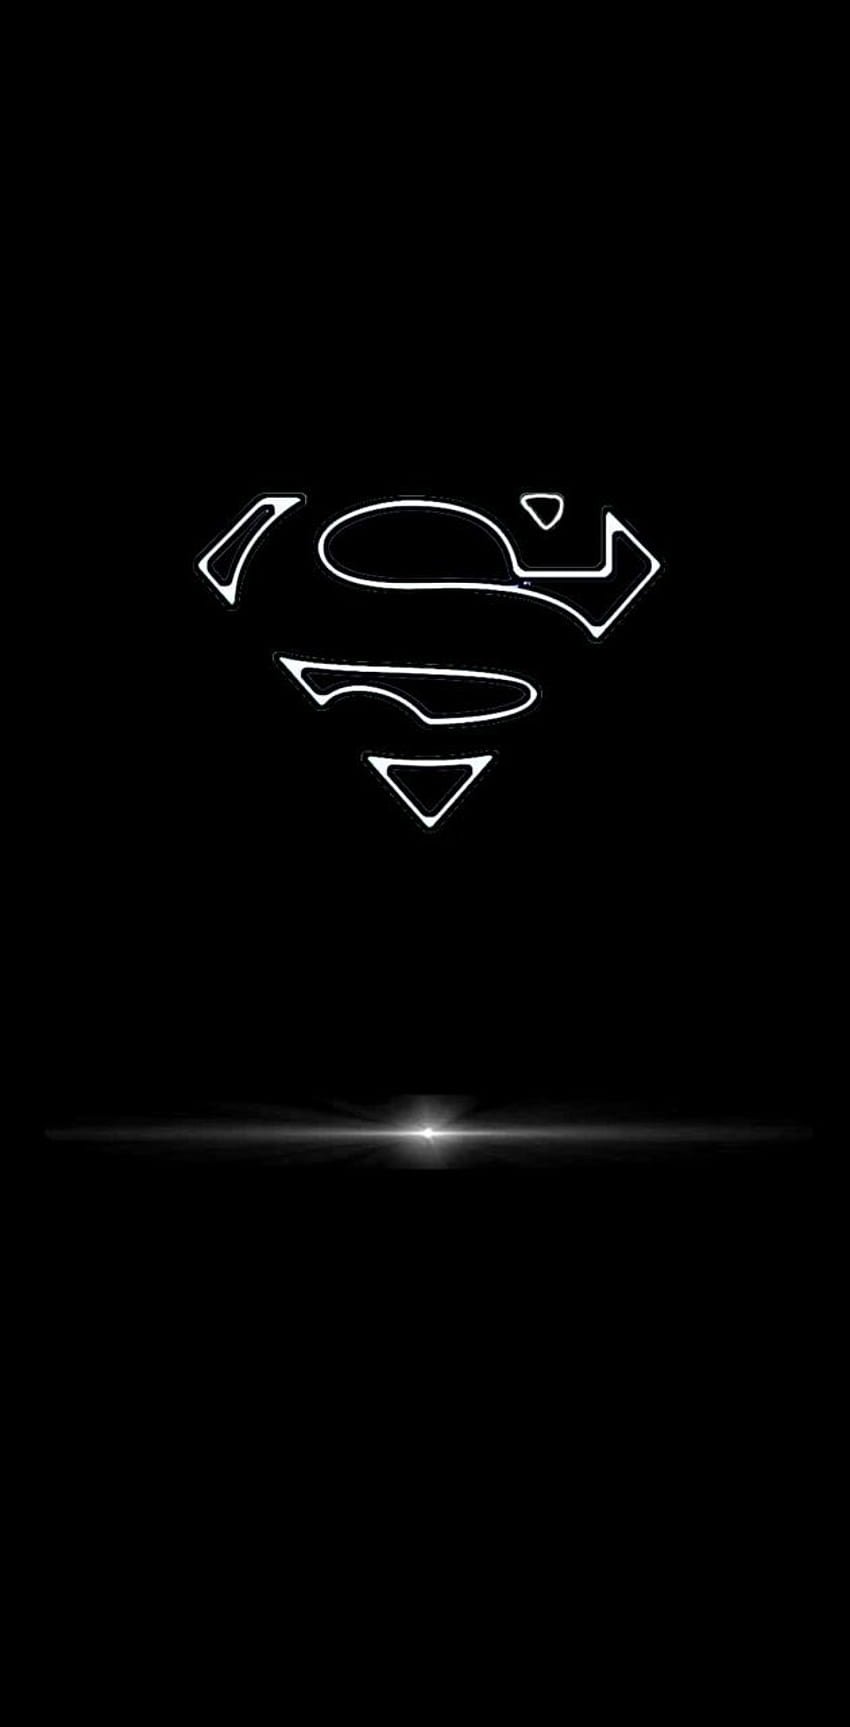 LOGO SUPERMAN, Logo Superman Android wallpaper ponsel HD